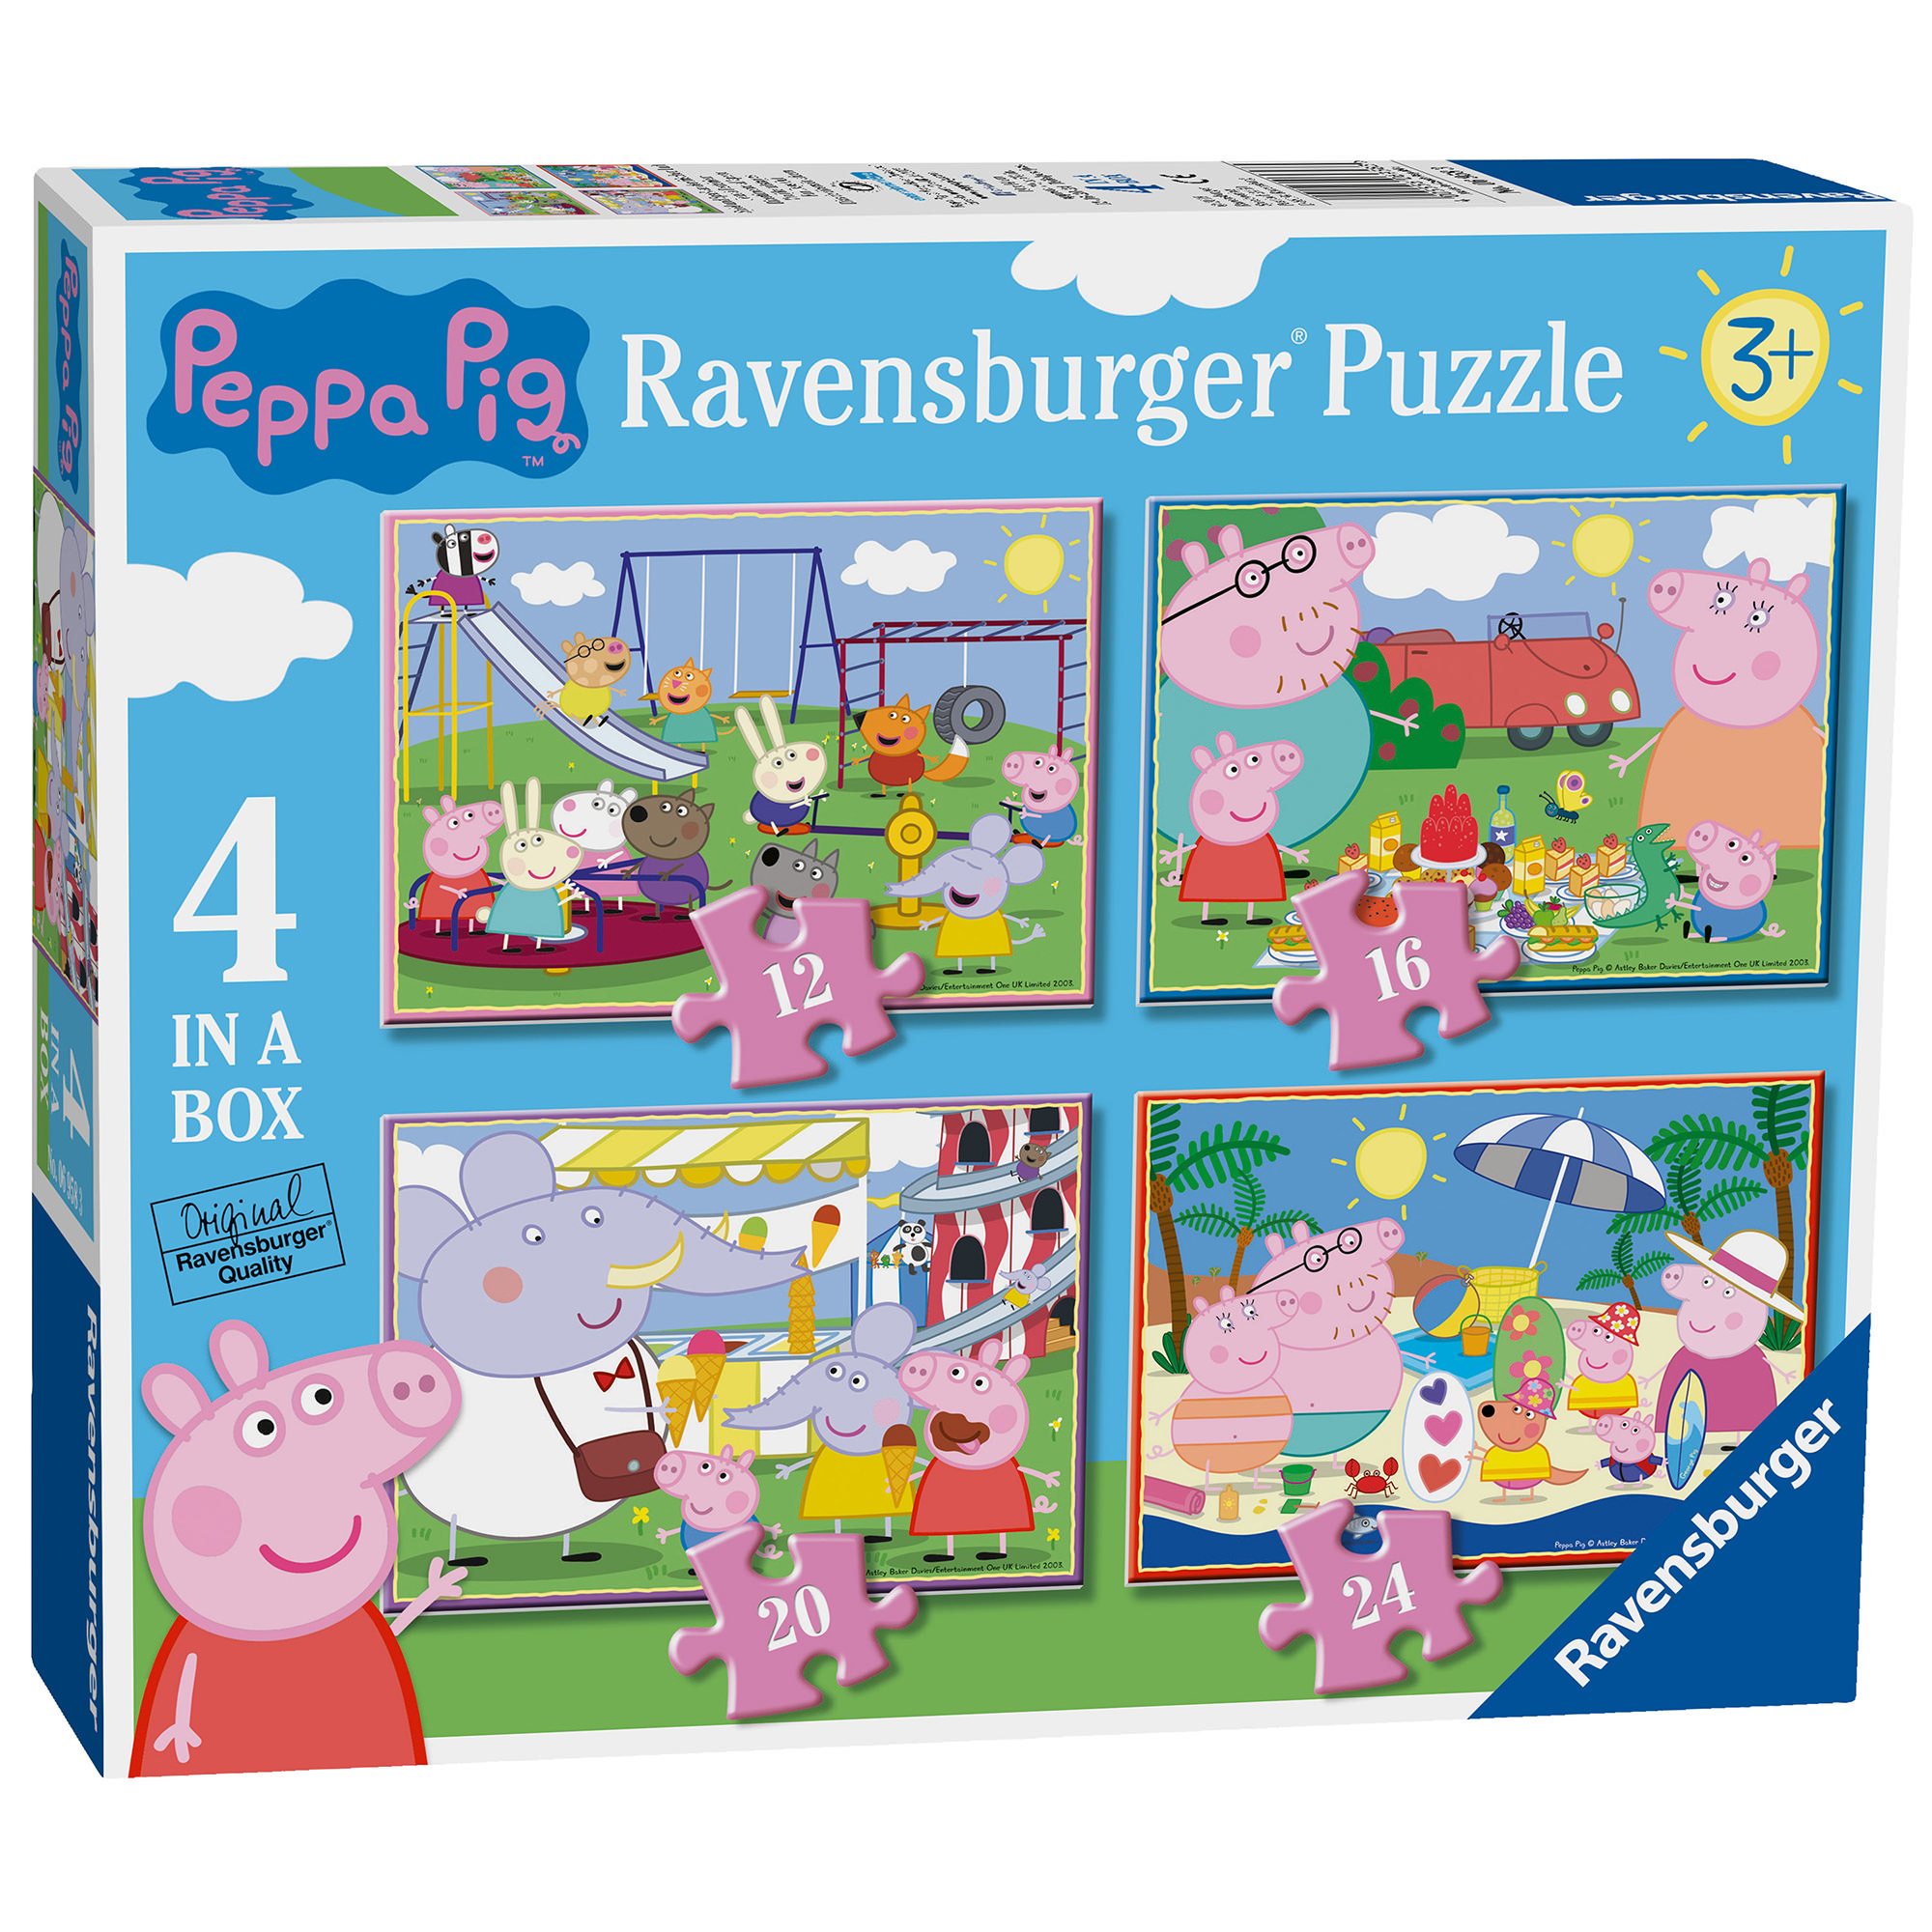 Ravensburger Peppa Pig Boîte 4 in environ 10.16 cm Jigsaw Puzzles pour... 12, 16, 20, 24 PIECES 